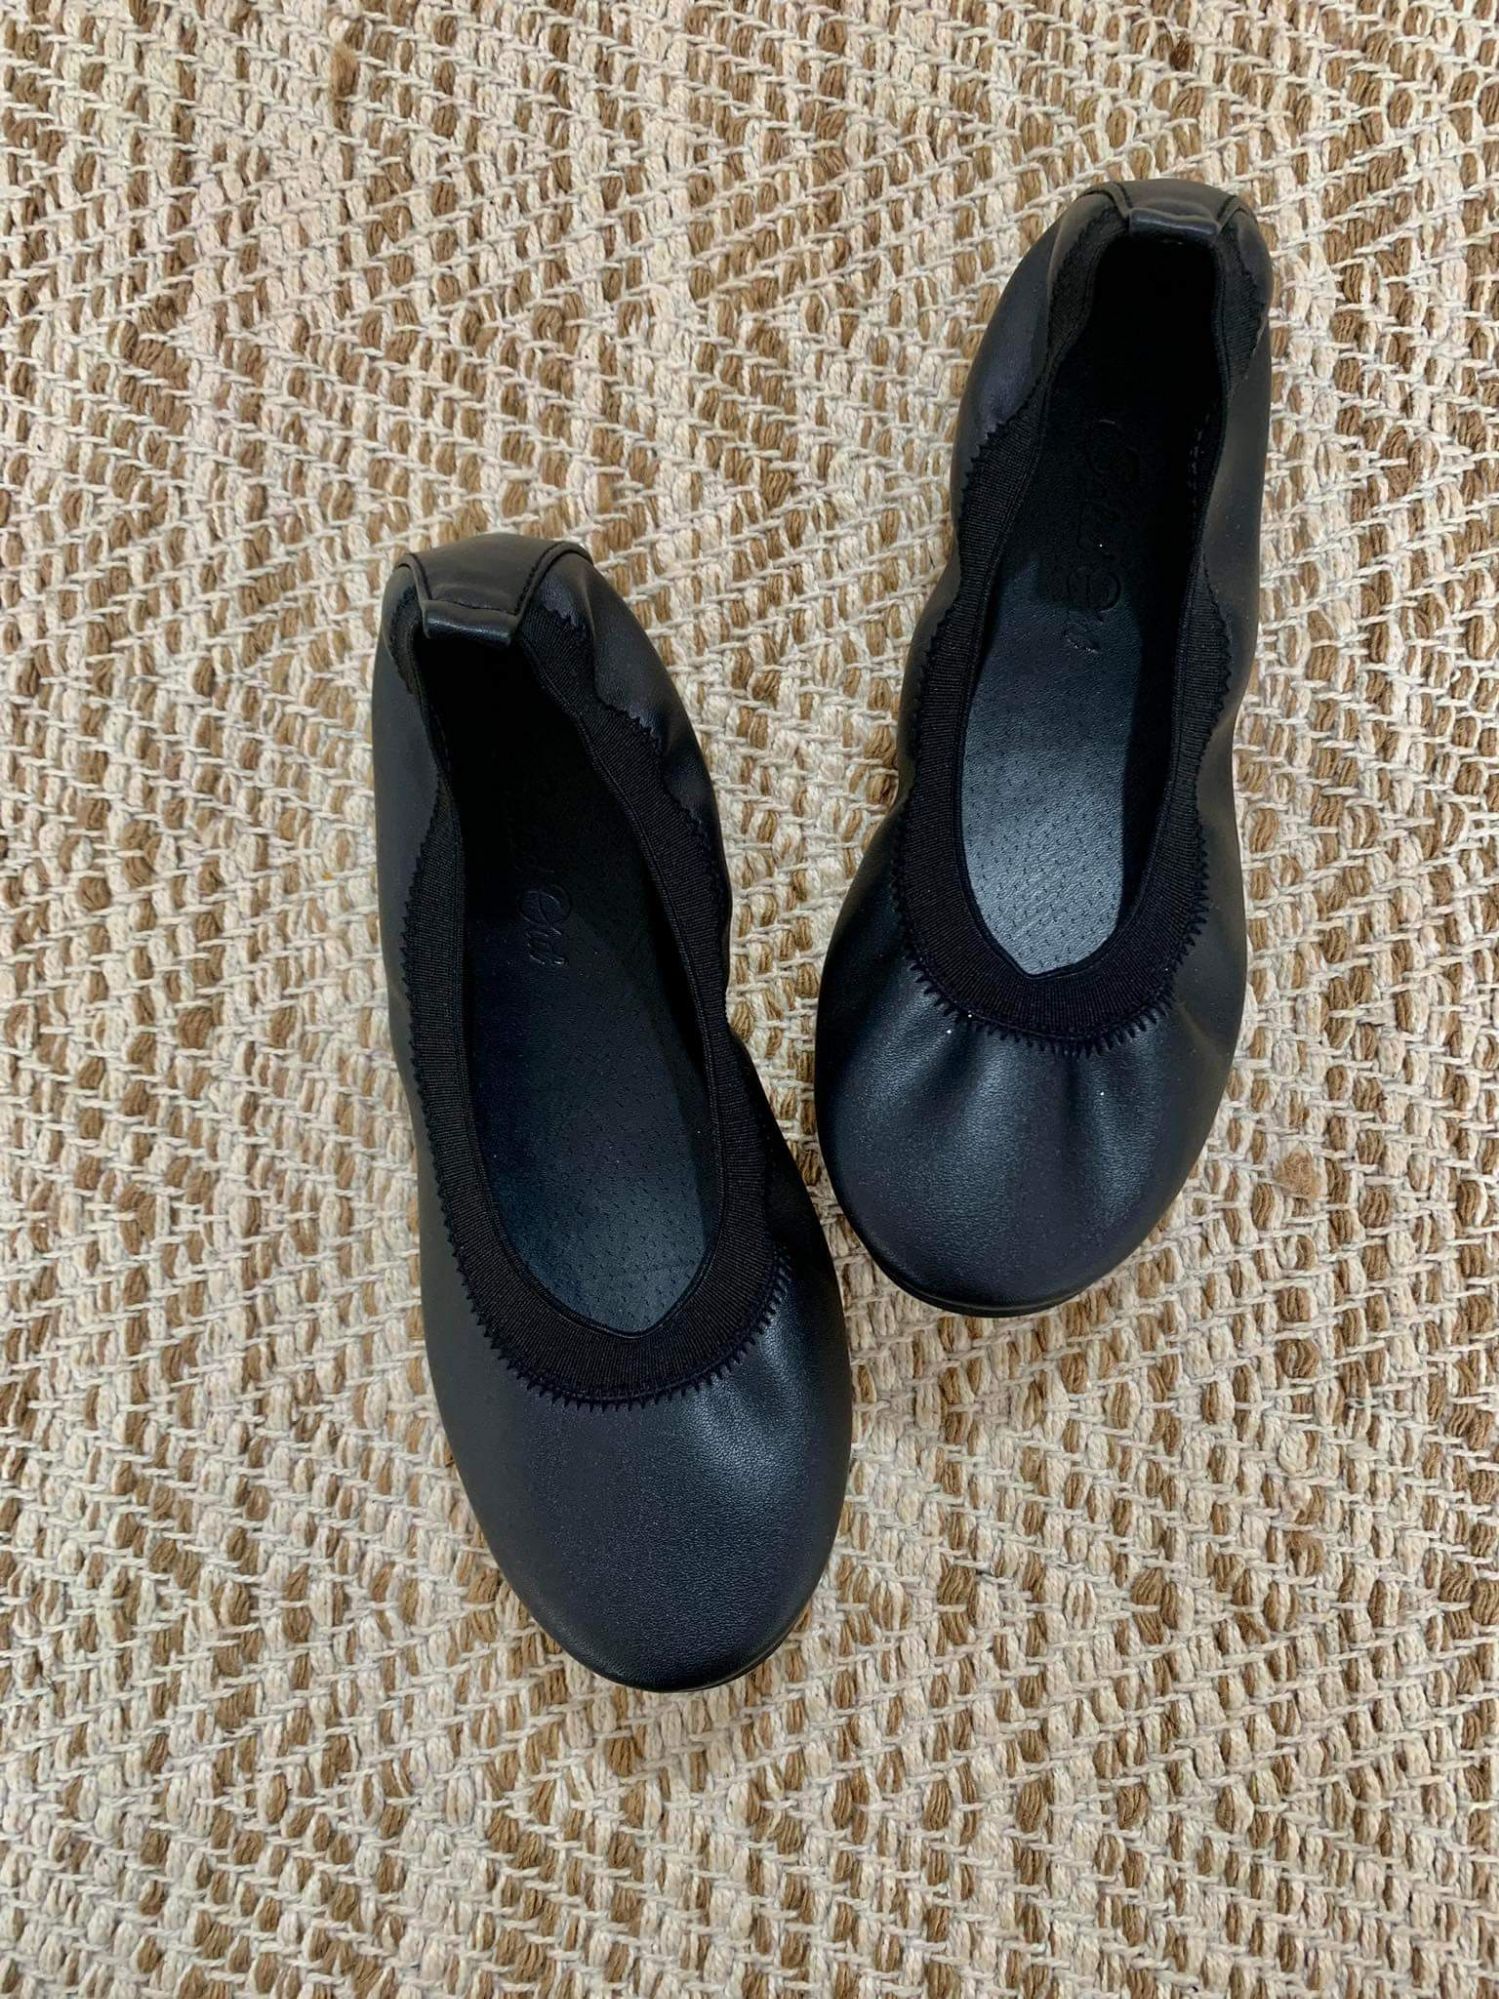 Marikina Ballet Flats Shoes: - Plain Black - Add 1 size for Regular ...